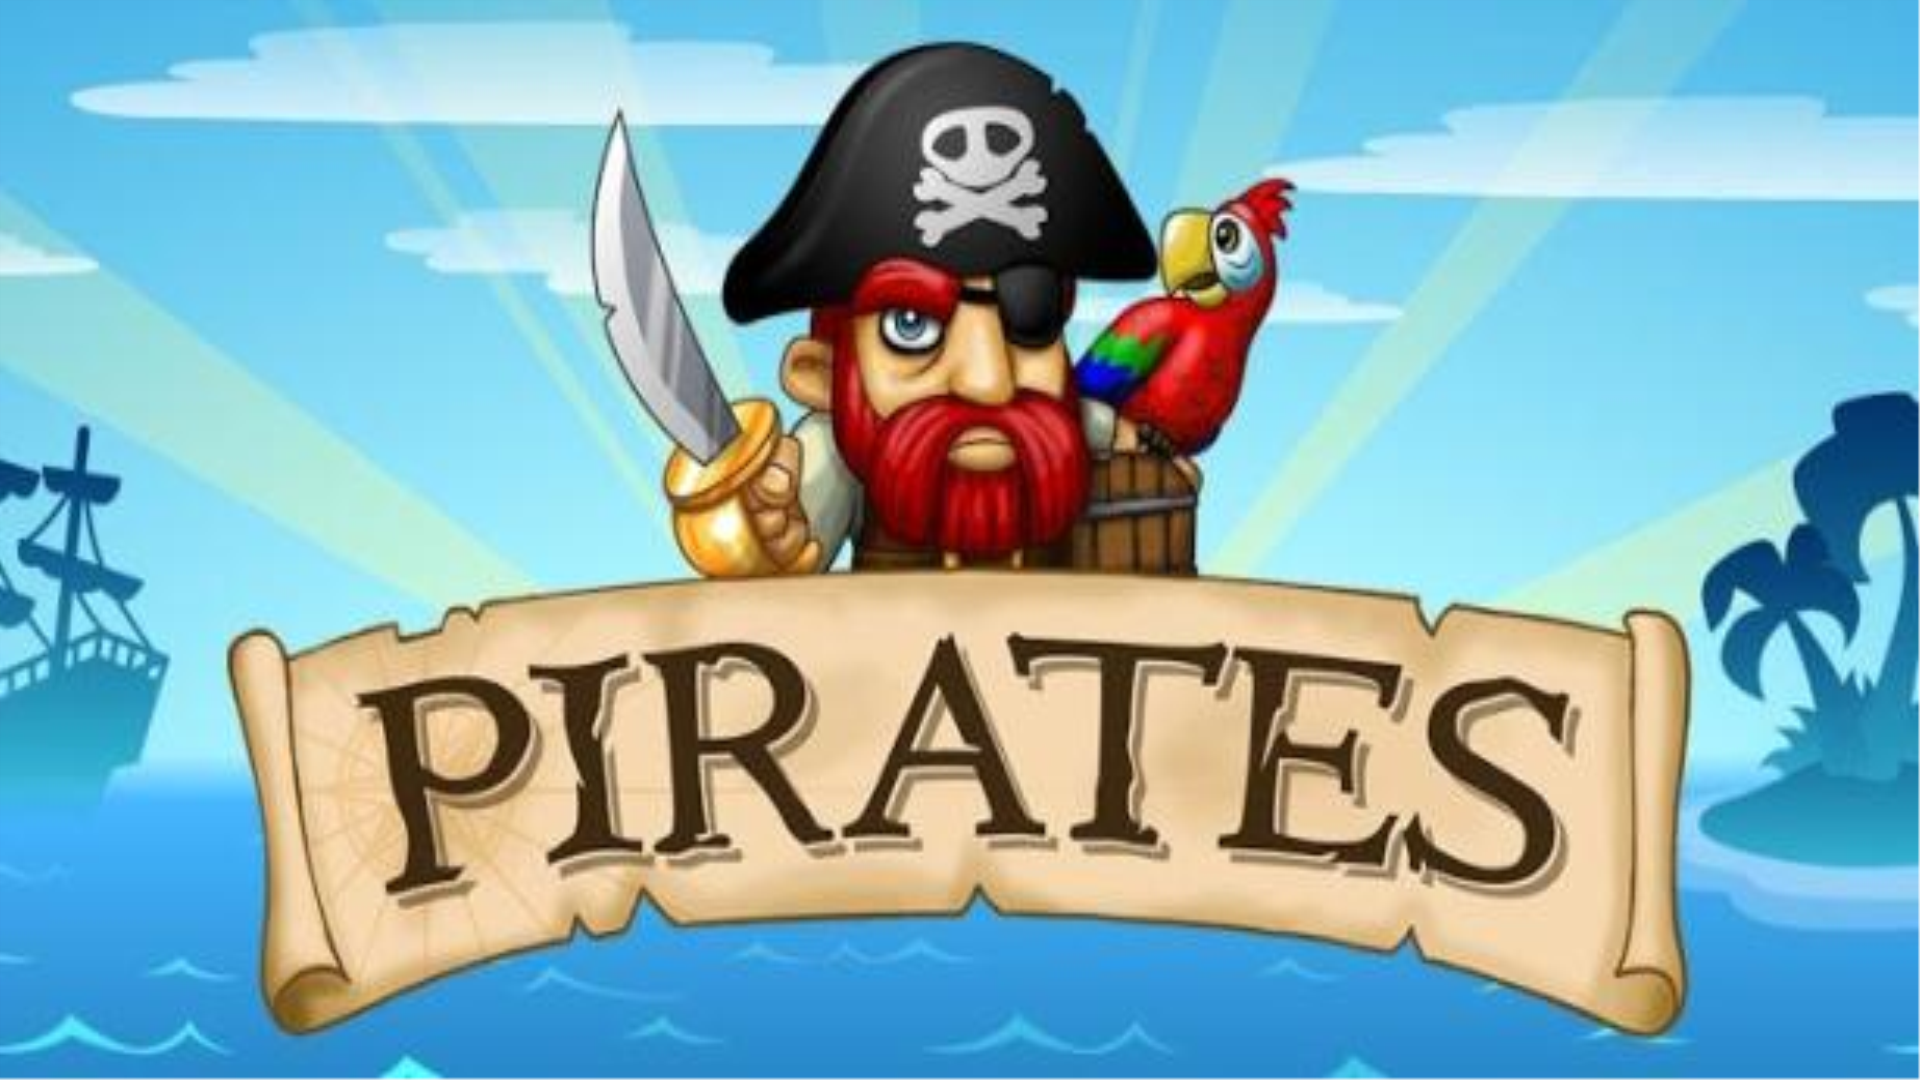 Последний пират игра. Pirates Pirates игра. Пираты на андроид. Пираты игра мобильная. Игра про пиратов на Android.